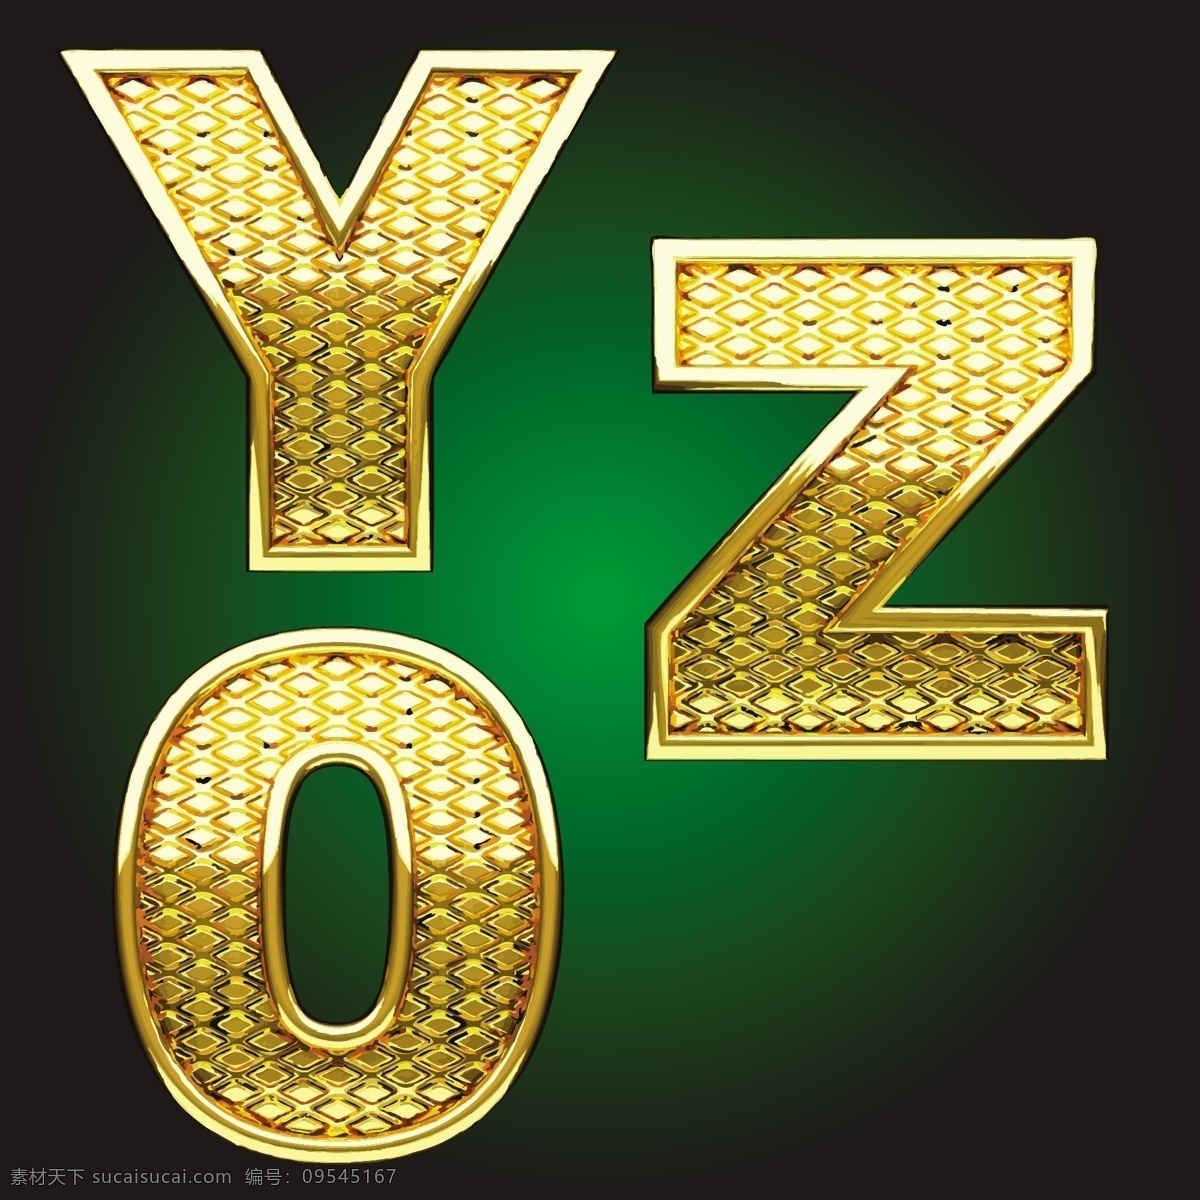 yoz 金属 字母 金属字母 金色字母 创意字母 金属纹理 书画文字 文化艺术 矢量素材 黑色